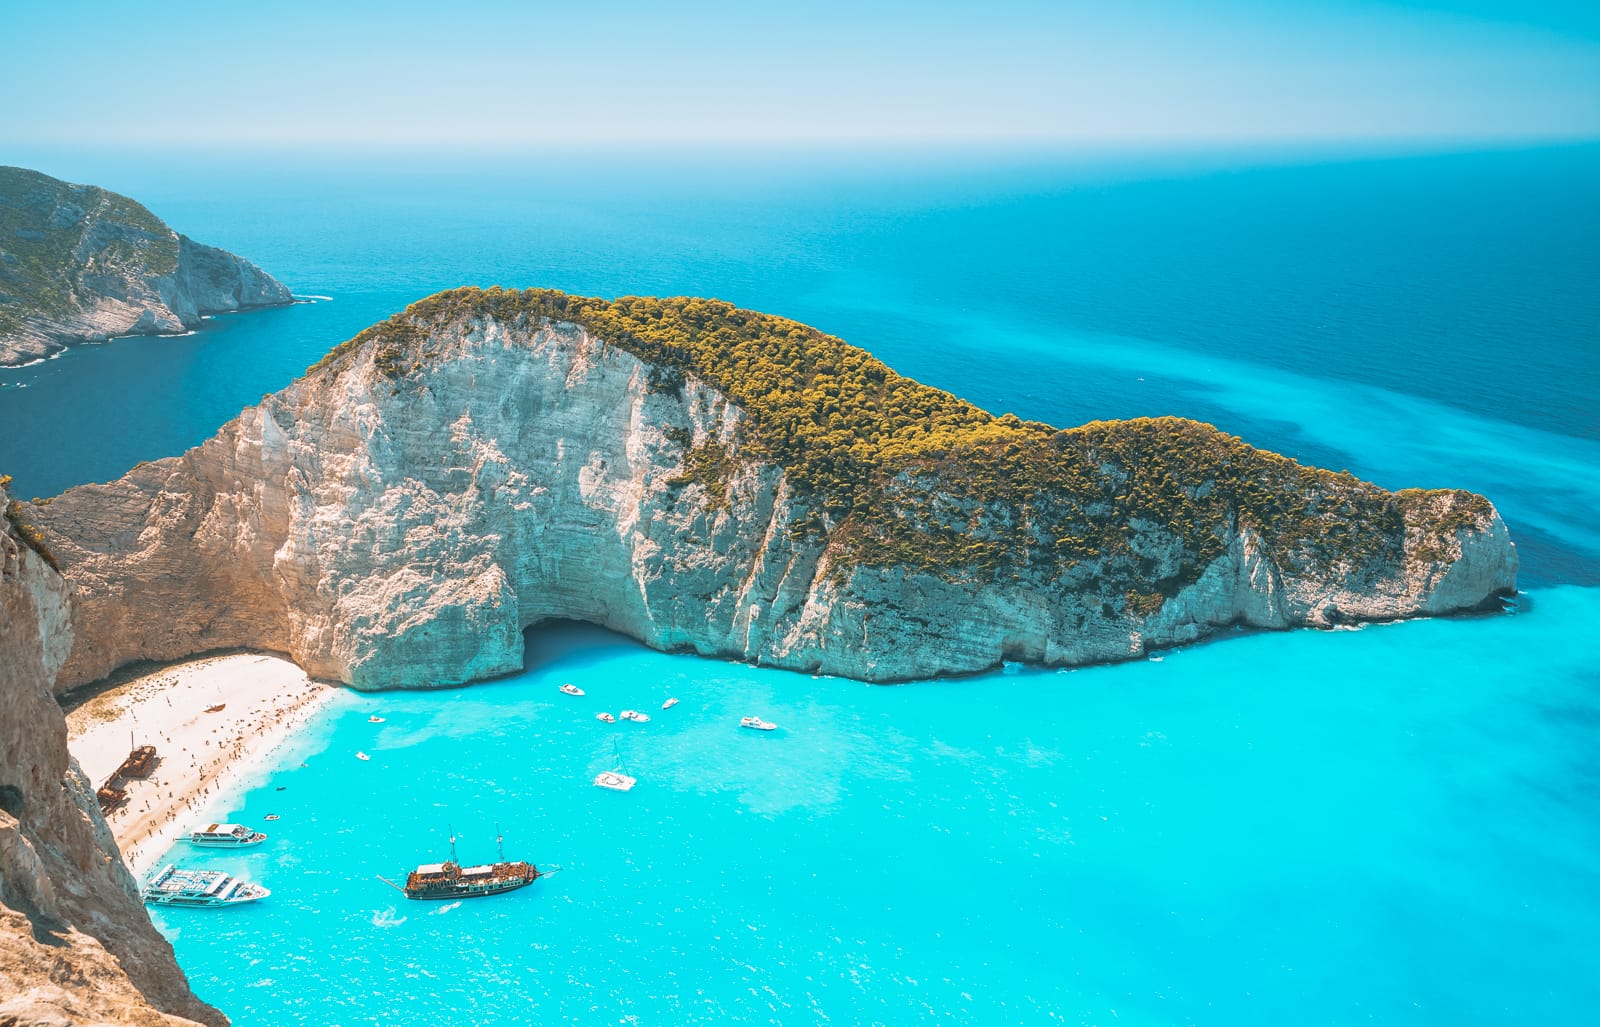 Best Islands to Visit in Greece